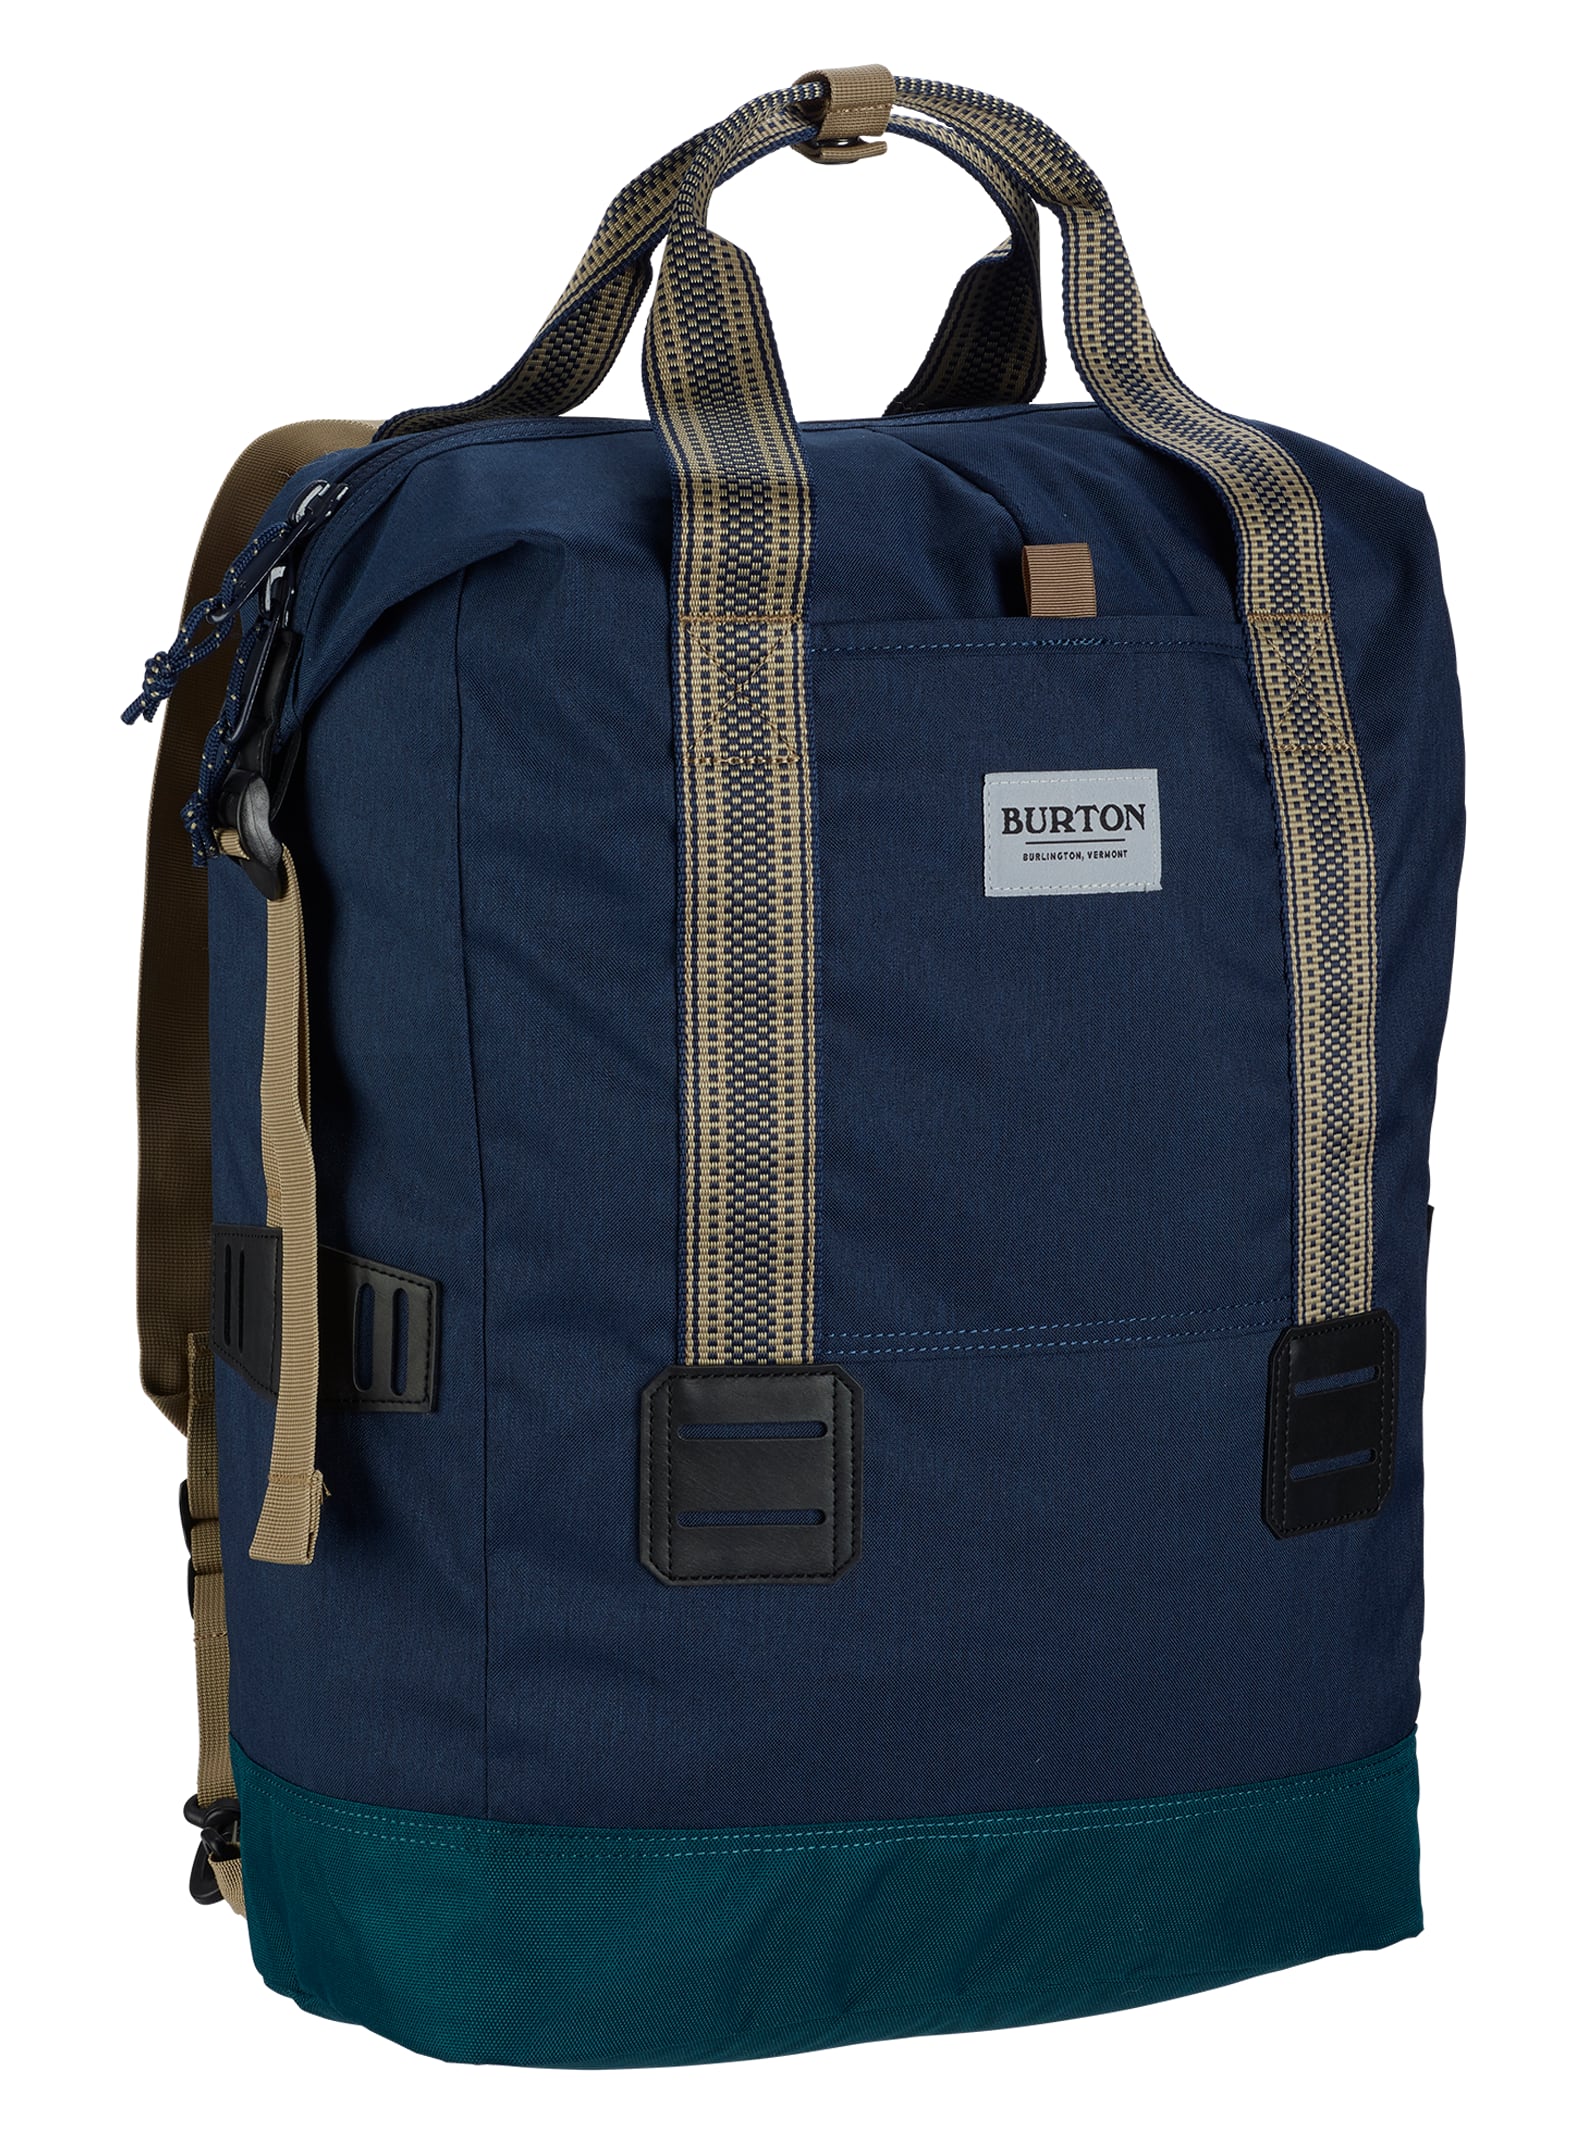 Burton Tinder Tote 25L Backpack | Burton.com Winter 2020 US